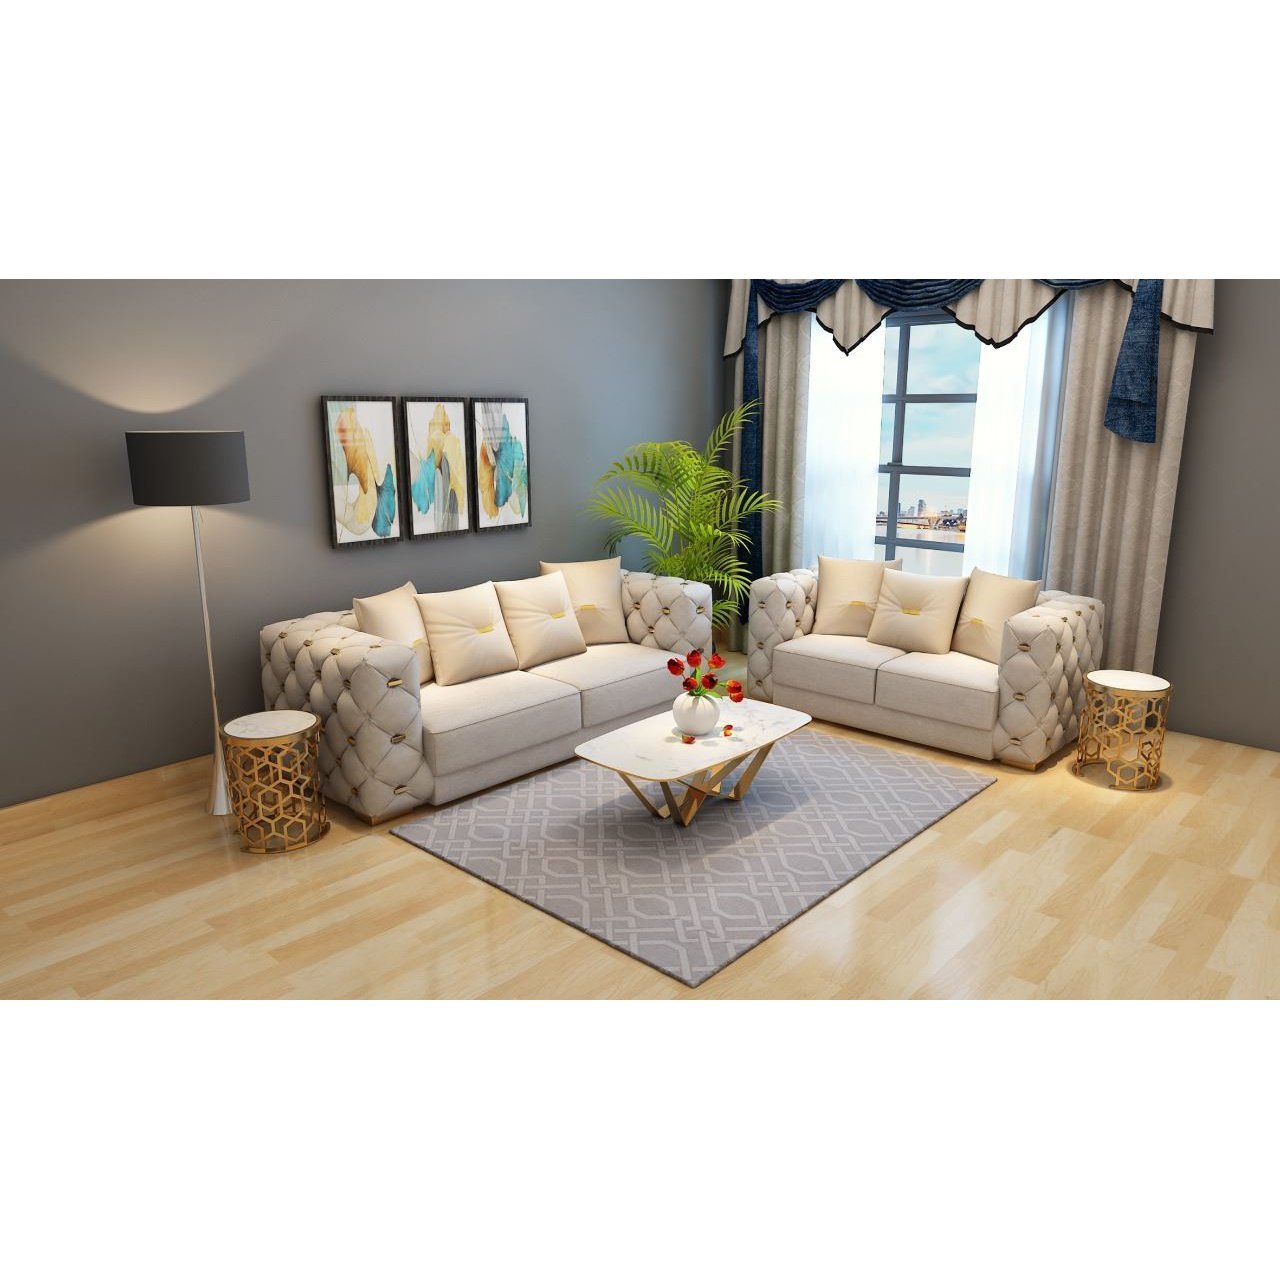 VR-158 CAVALLI SOFA SET 3+2 Mobel Furniture